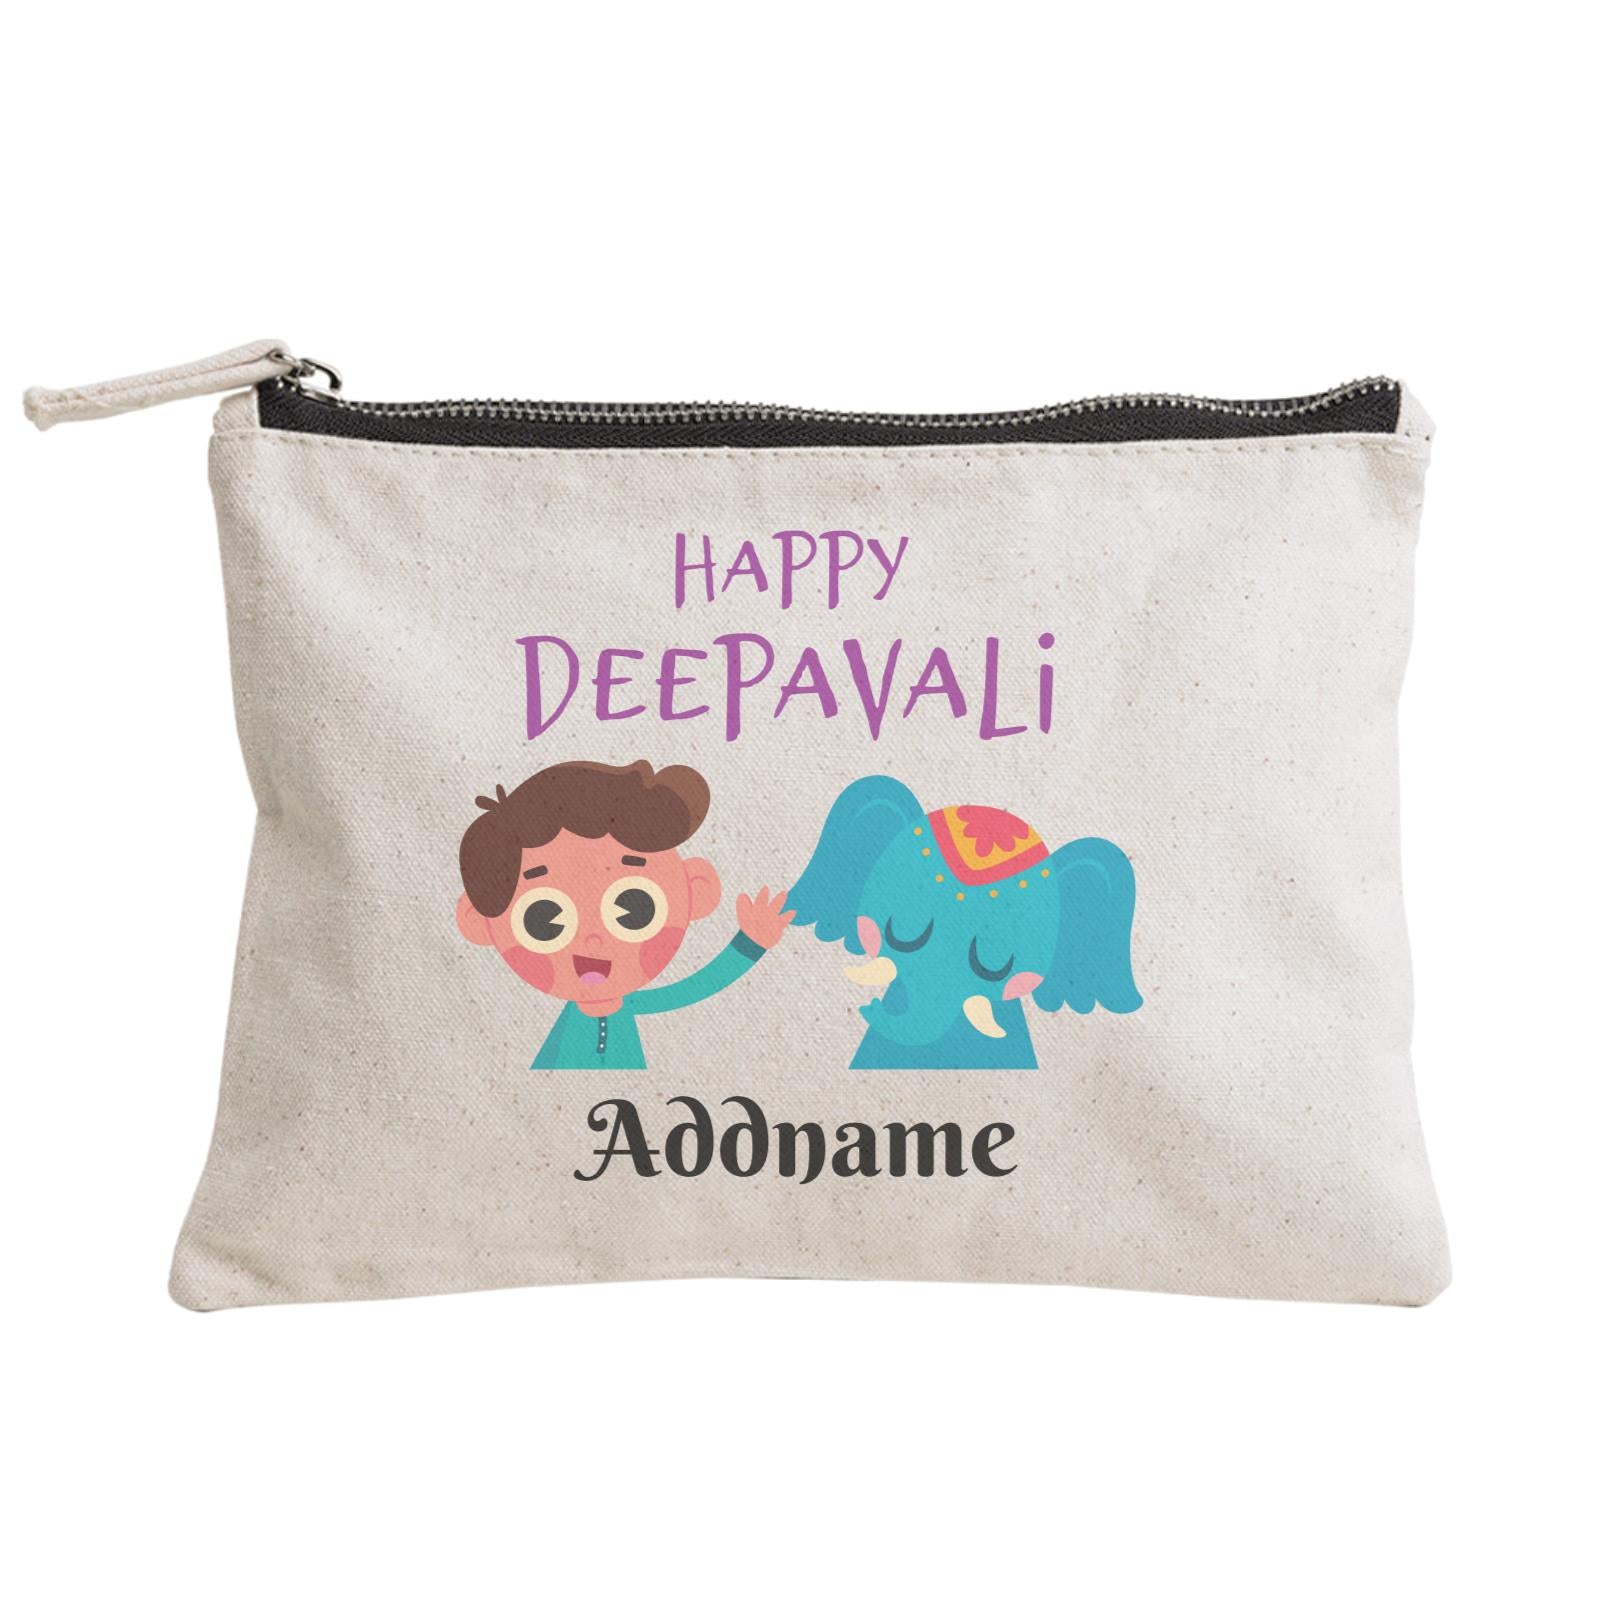 Deepavali Series Little Boy Wishes You Happy Deepavali Zipper Pouch